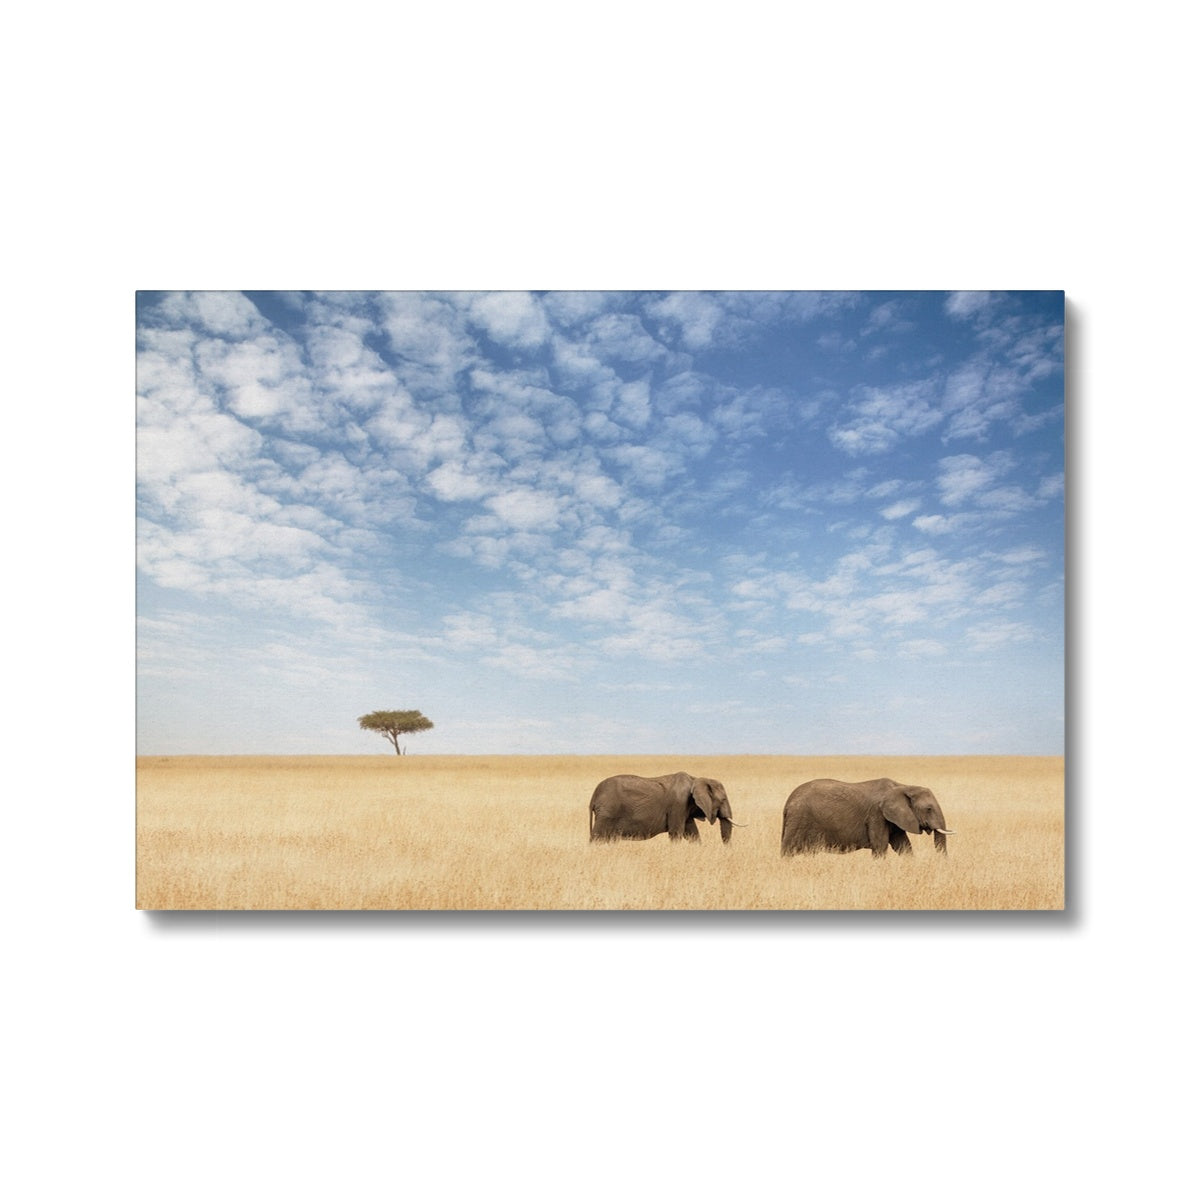 Elephants & Red Oat Grass Art Canvas